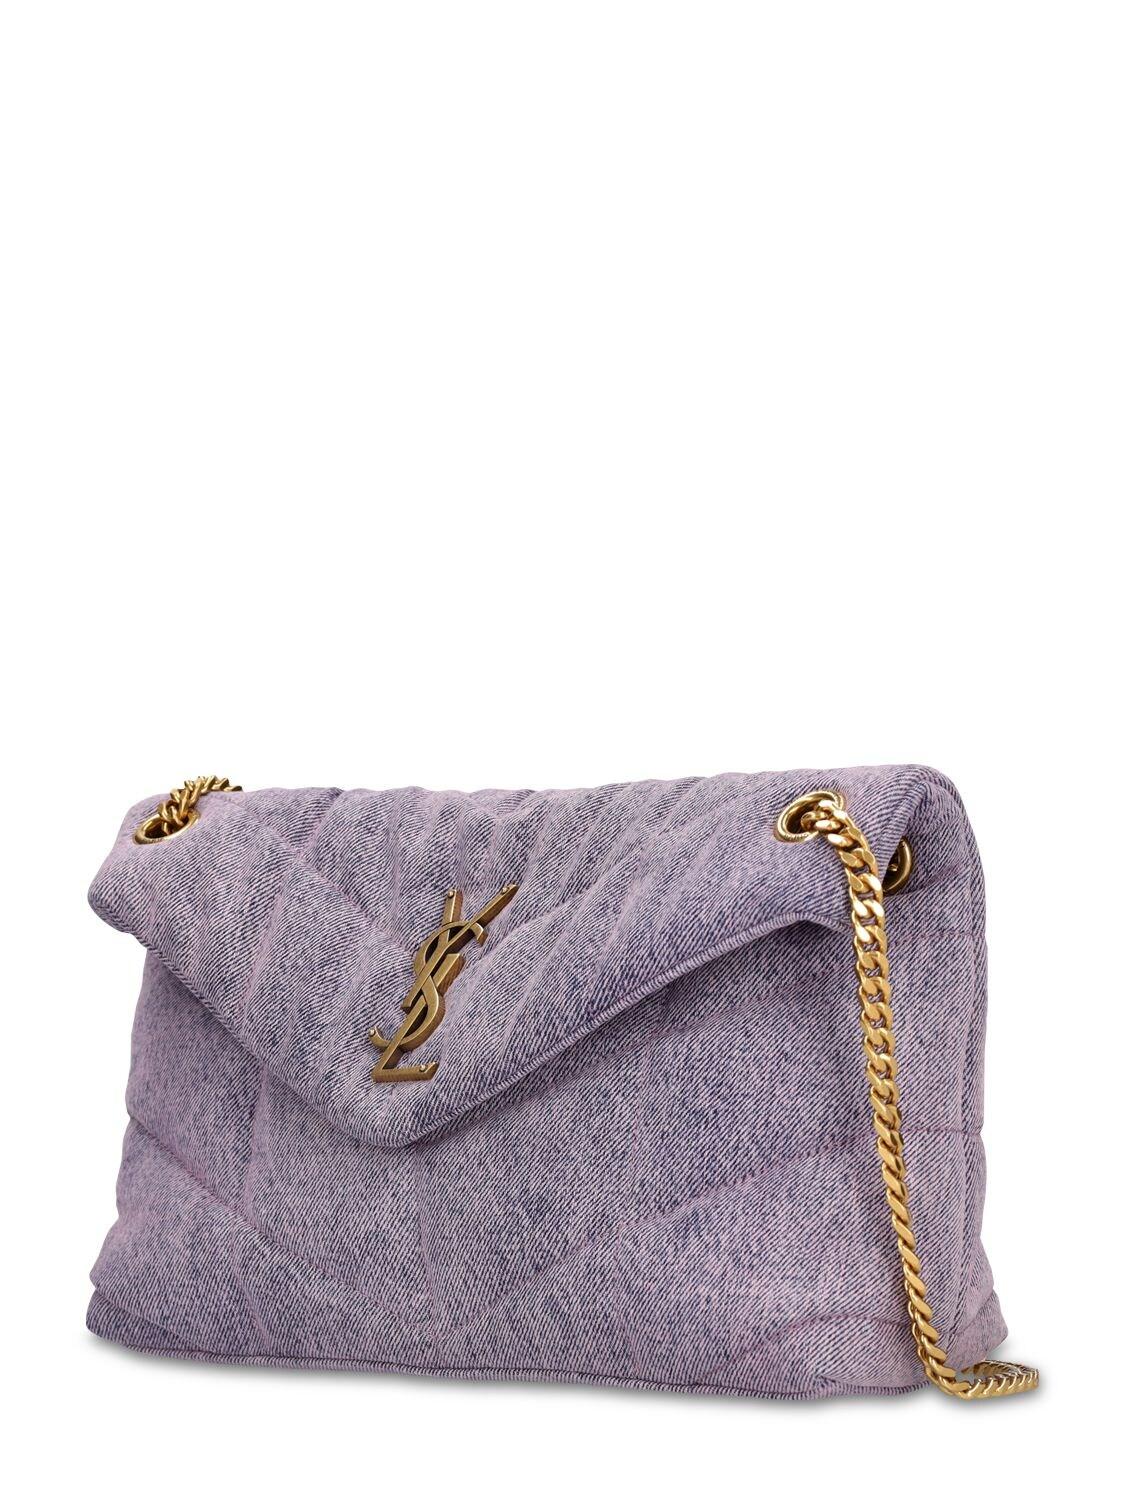 Saint Laurent Small Puffer Loulou Denim Shoulder Bag in Purple | Lyst